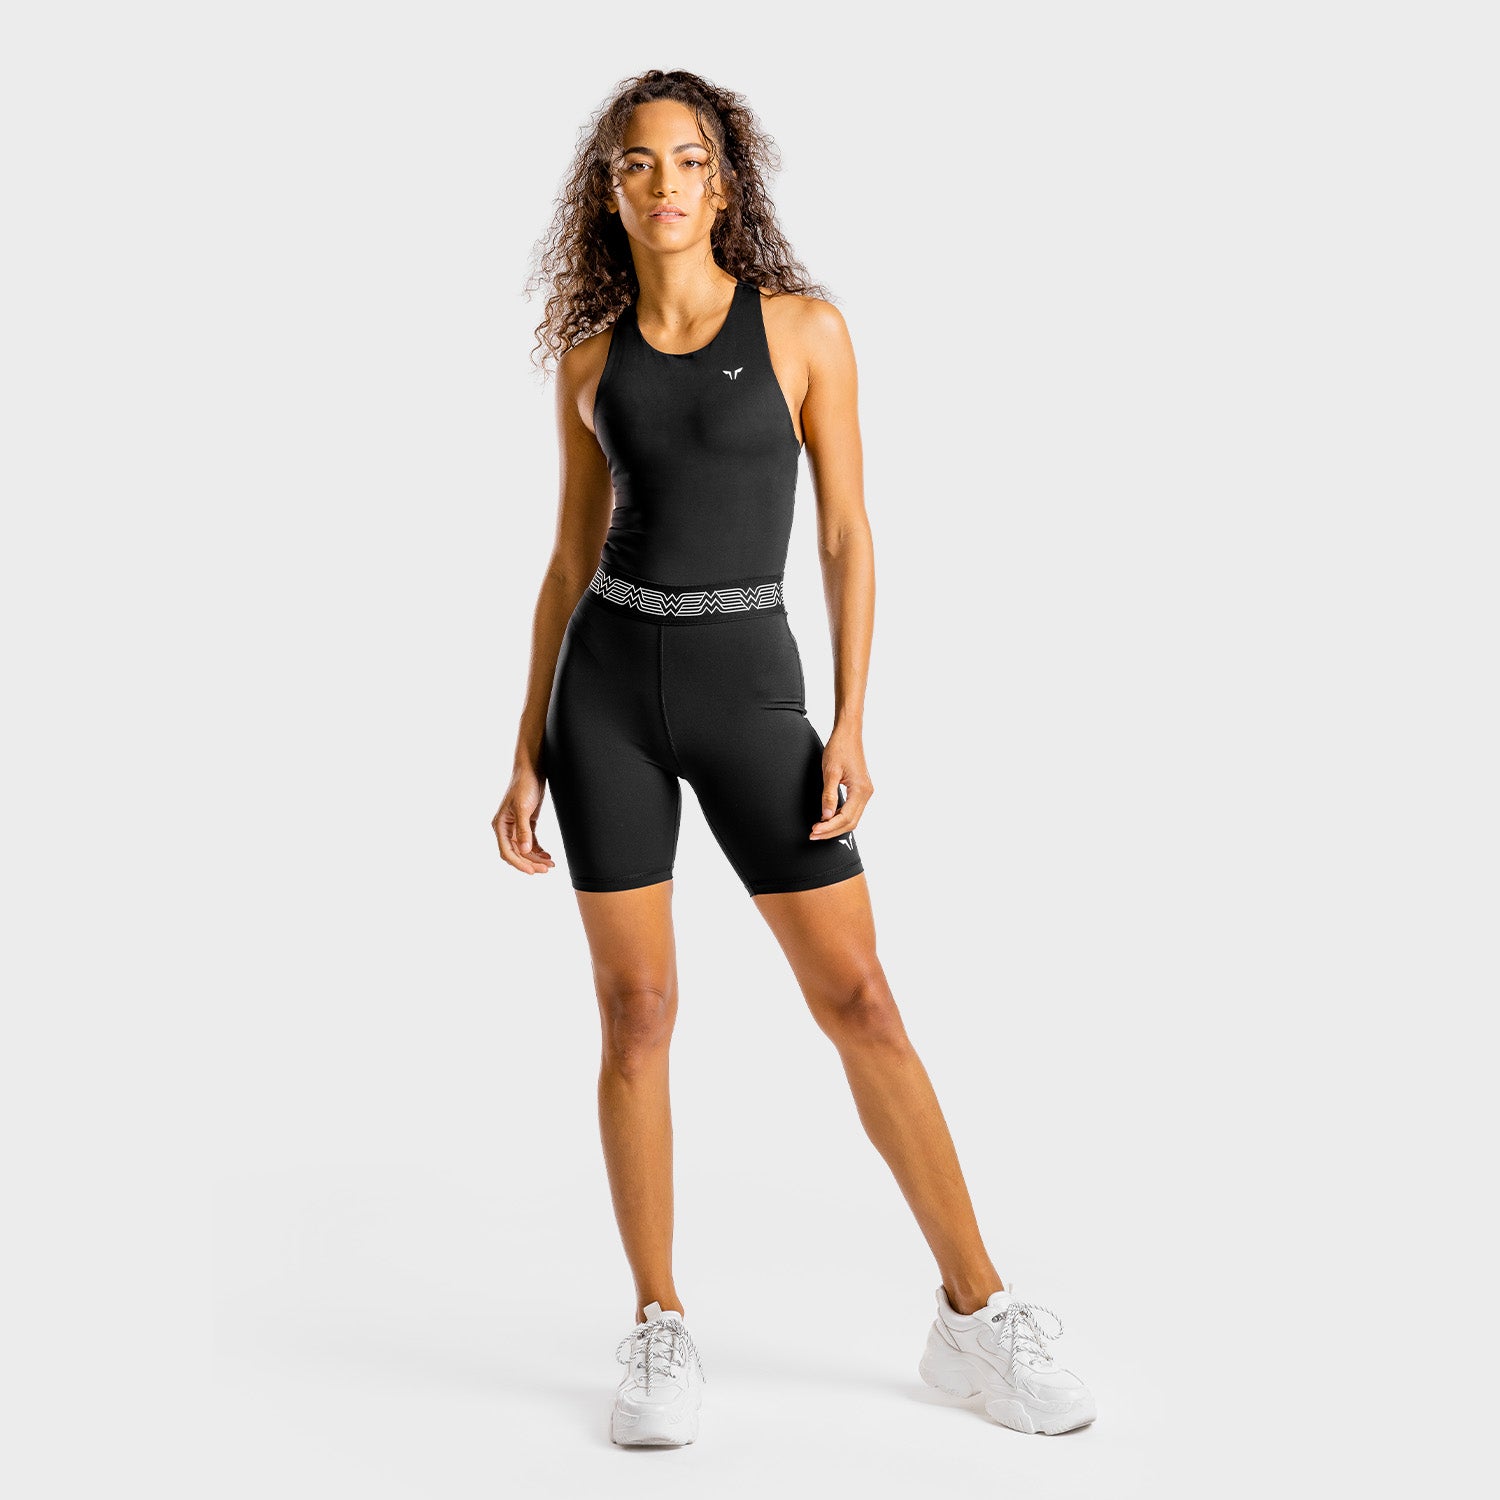 squatwolf-gym-bodysuit-tops-for-women-wonder-women-bodysuit-black-workout-bodysuit